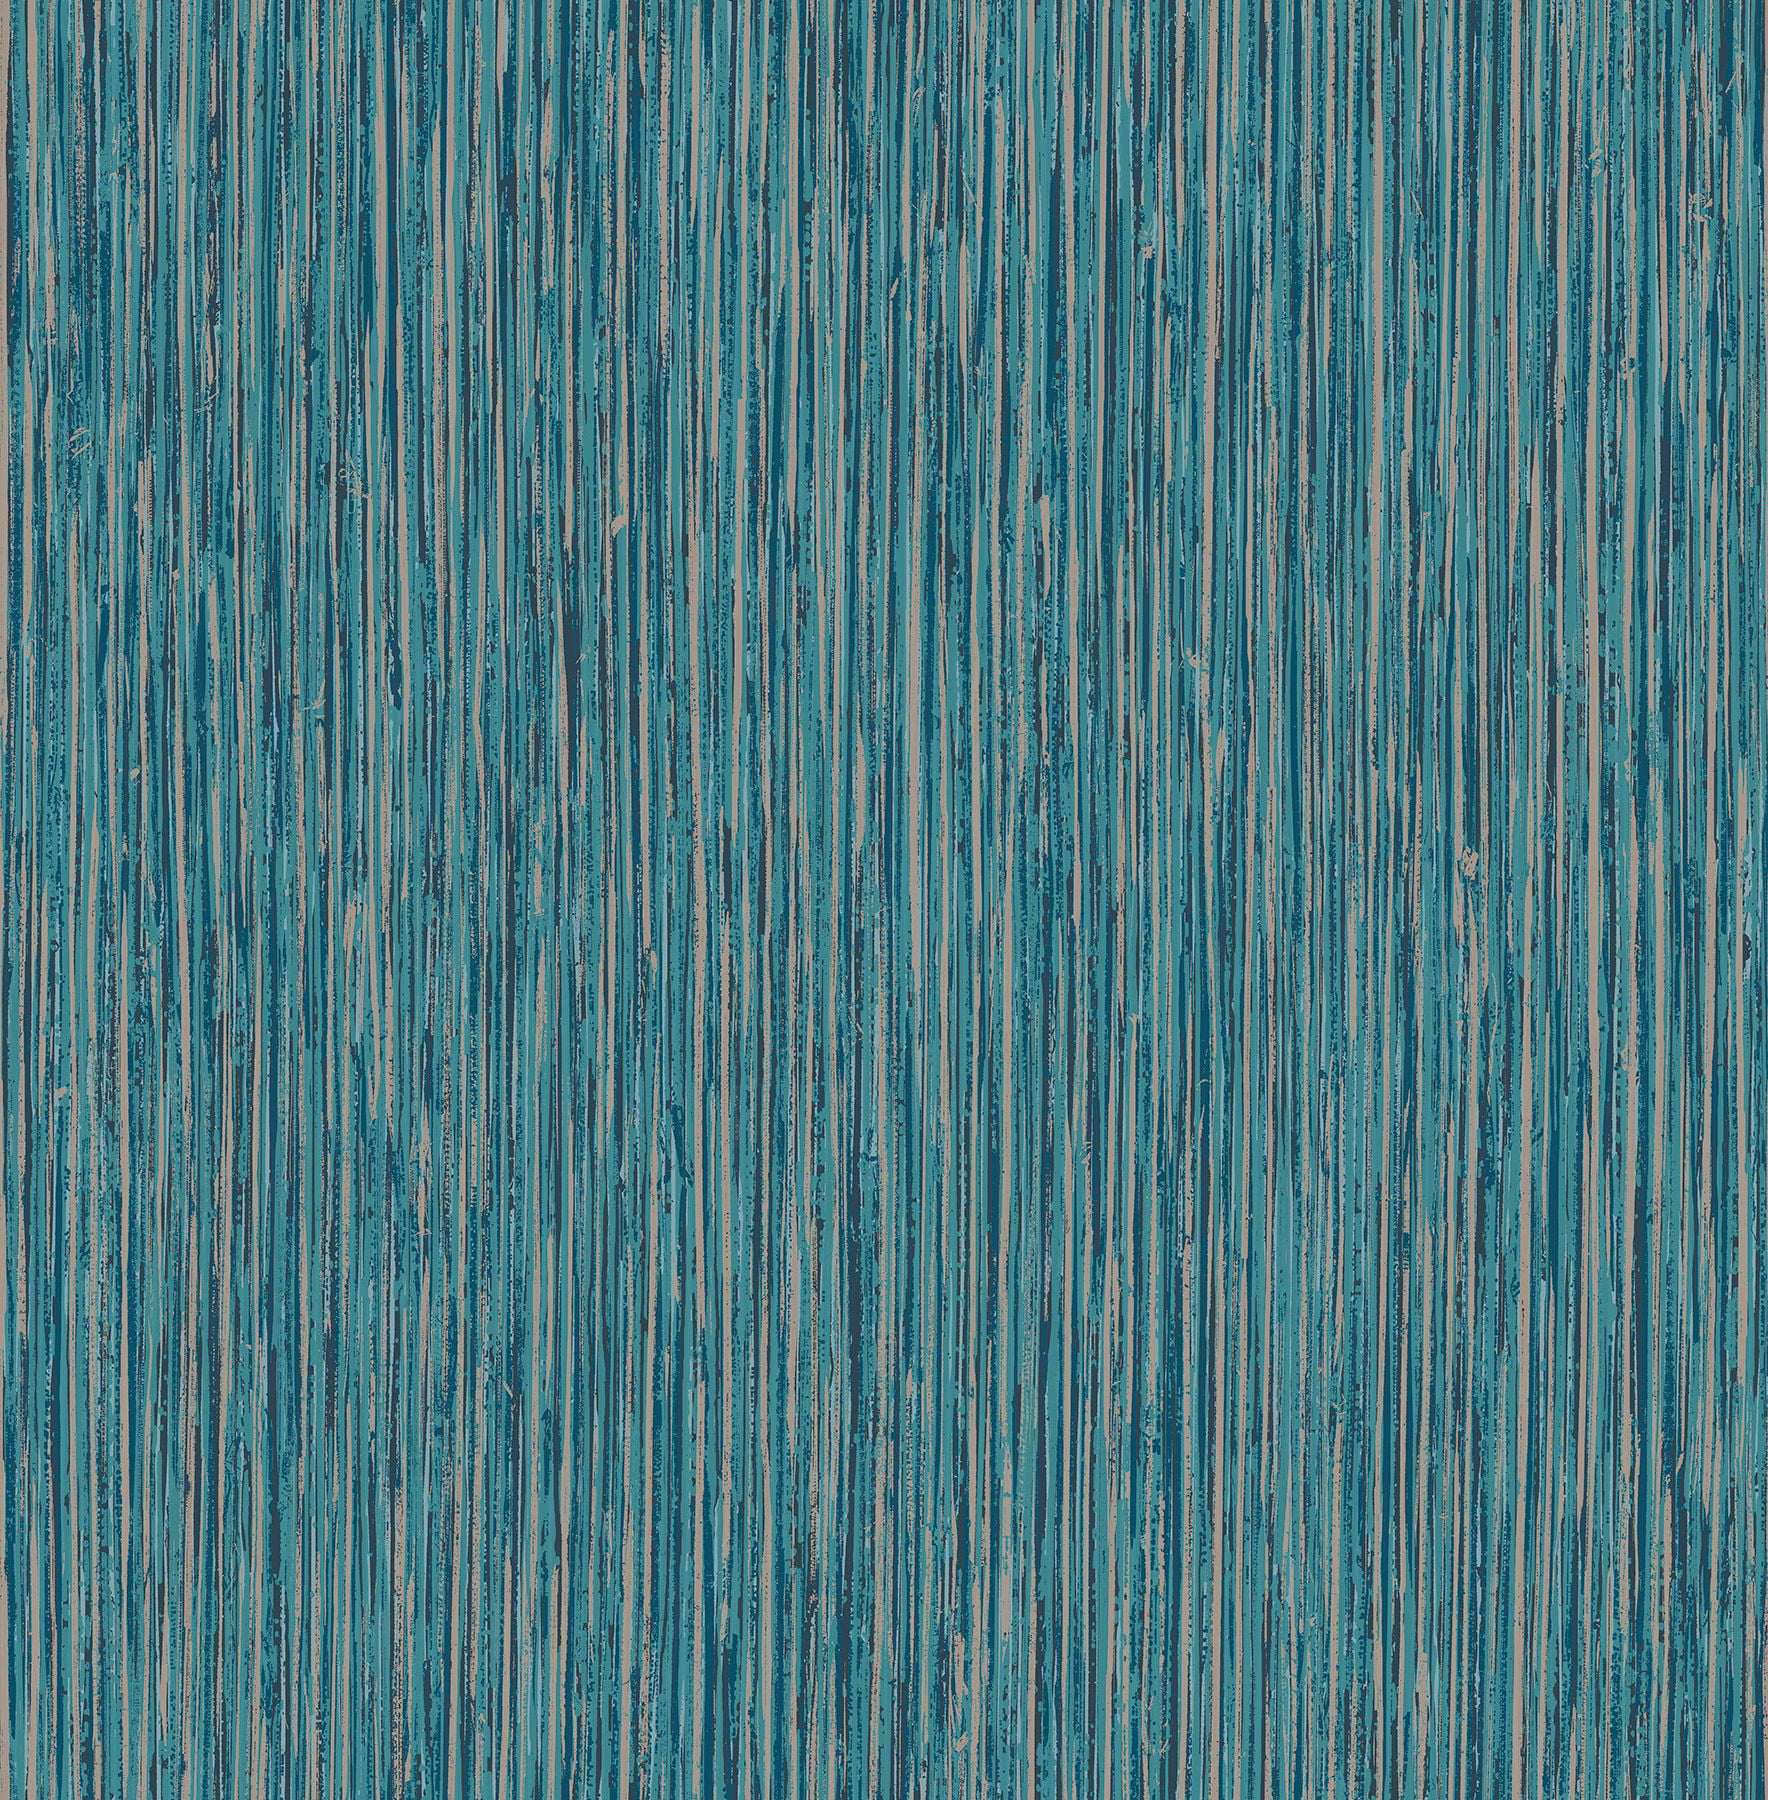 Fine Decor Kofi Blue Faux Grasscloth Wallpaper - Walmart.com